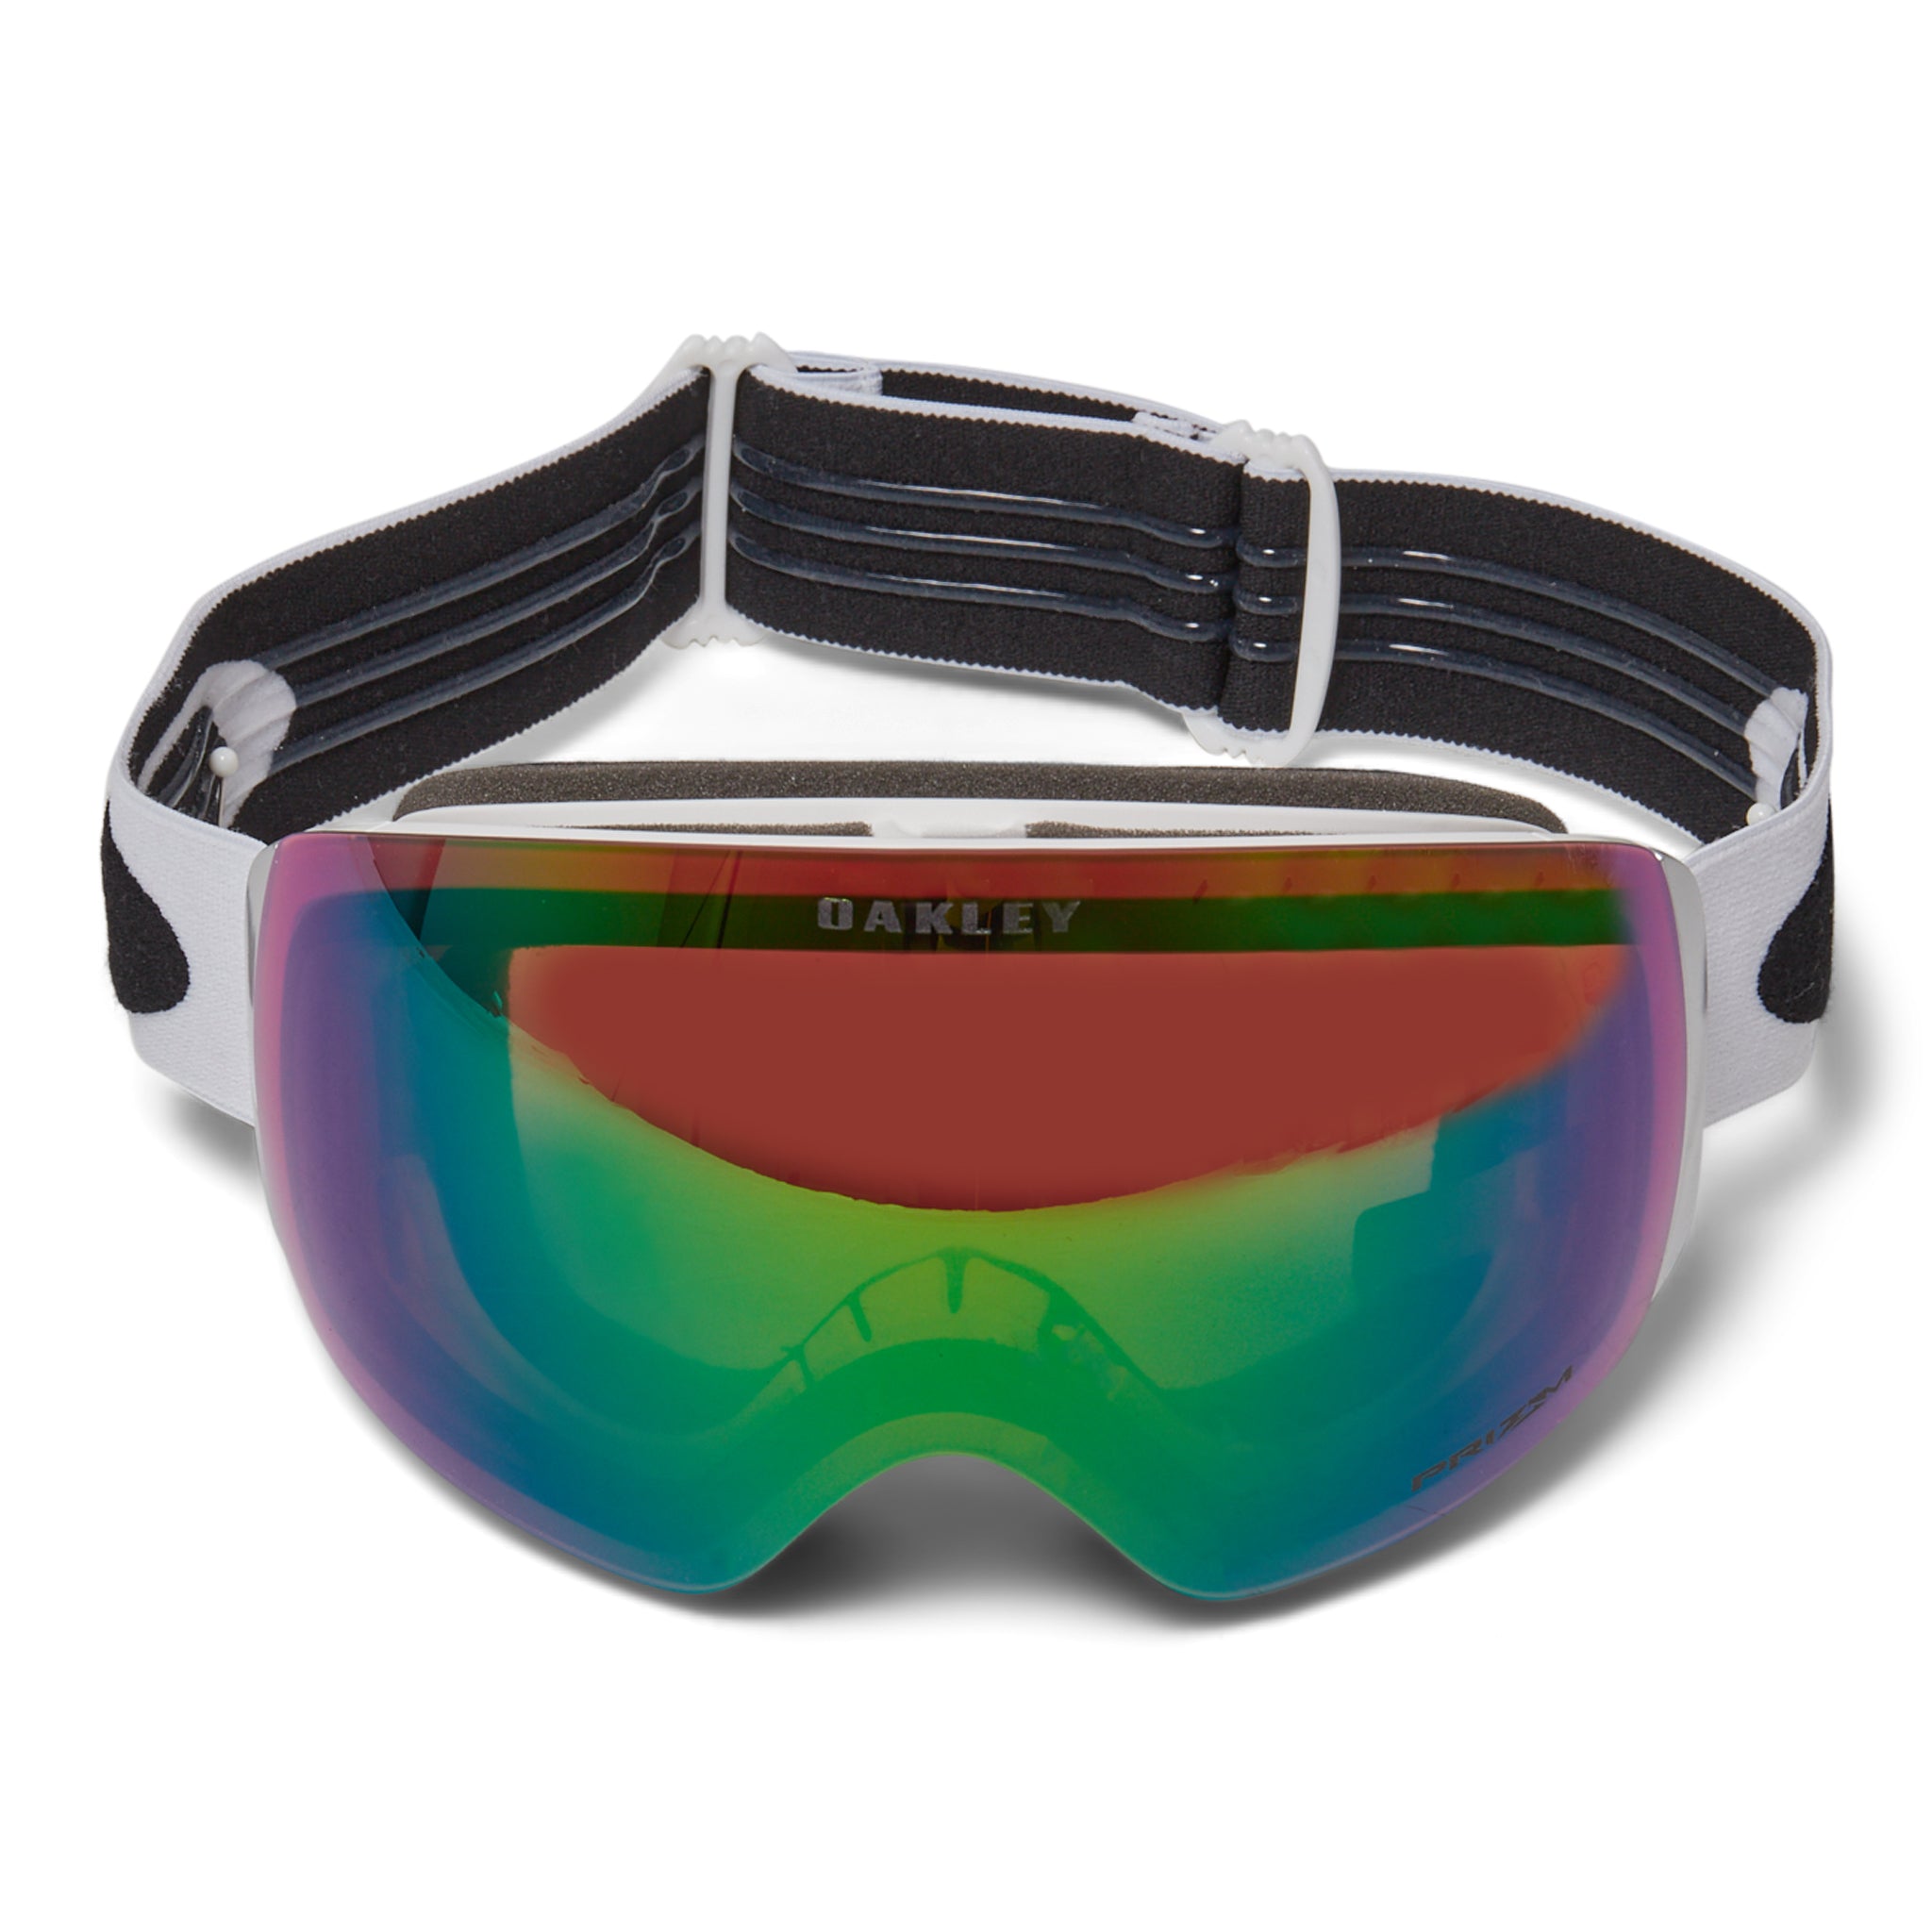 Oakley Flight Deck M Goggles - Matte White - Prizm Jade Iridium Lens |  Altitude Sports